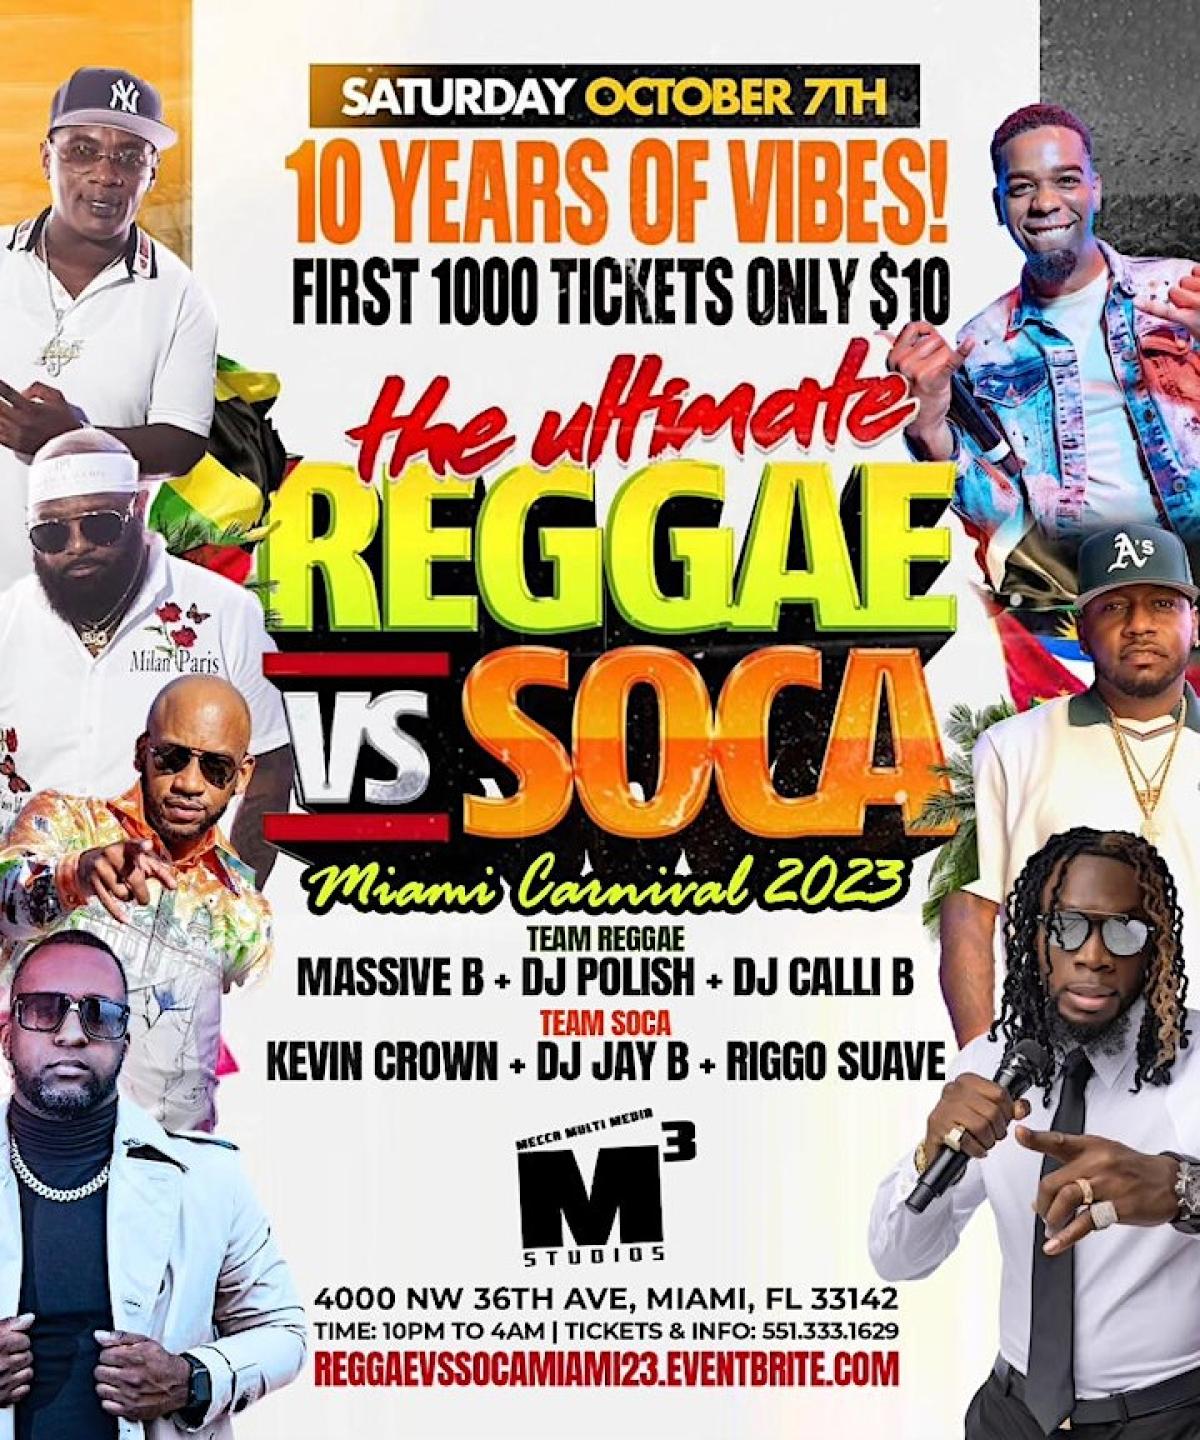 The Ultimate Reggae vs Soca flyer or graphic.